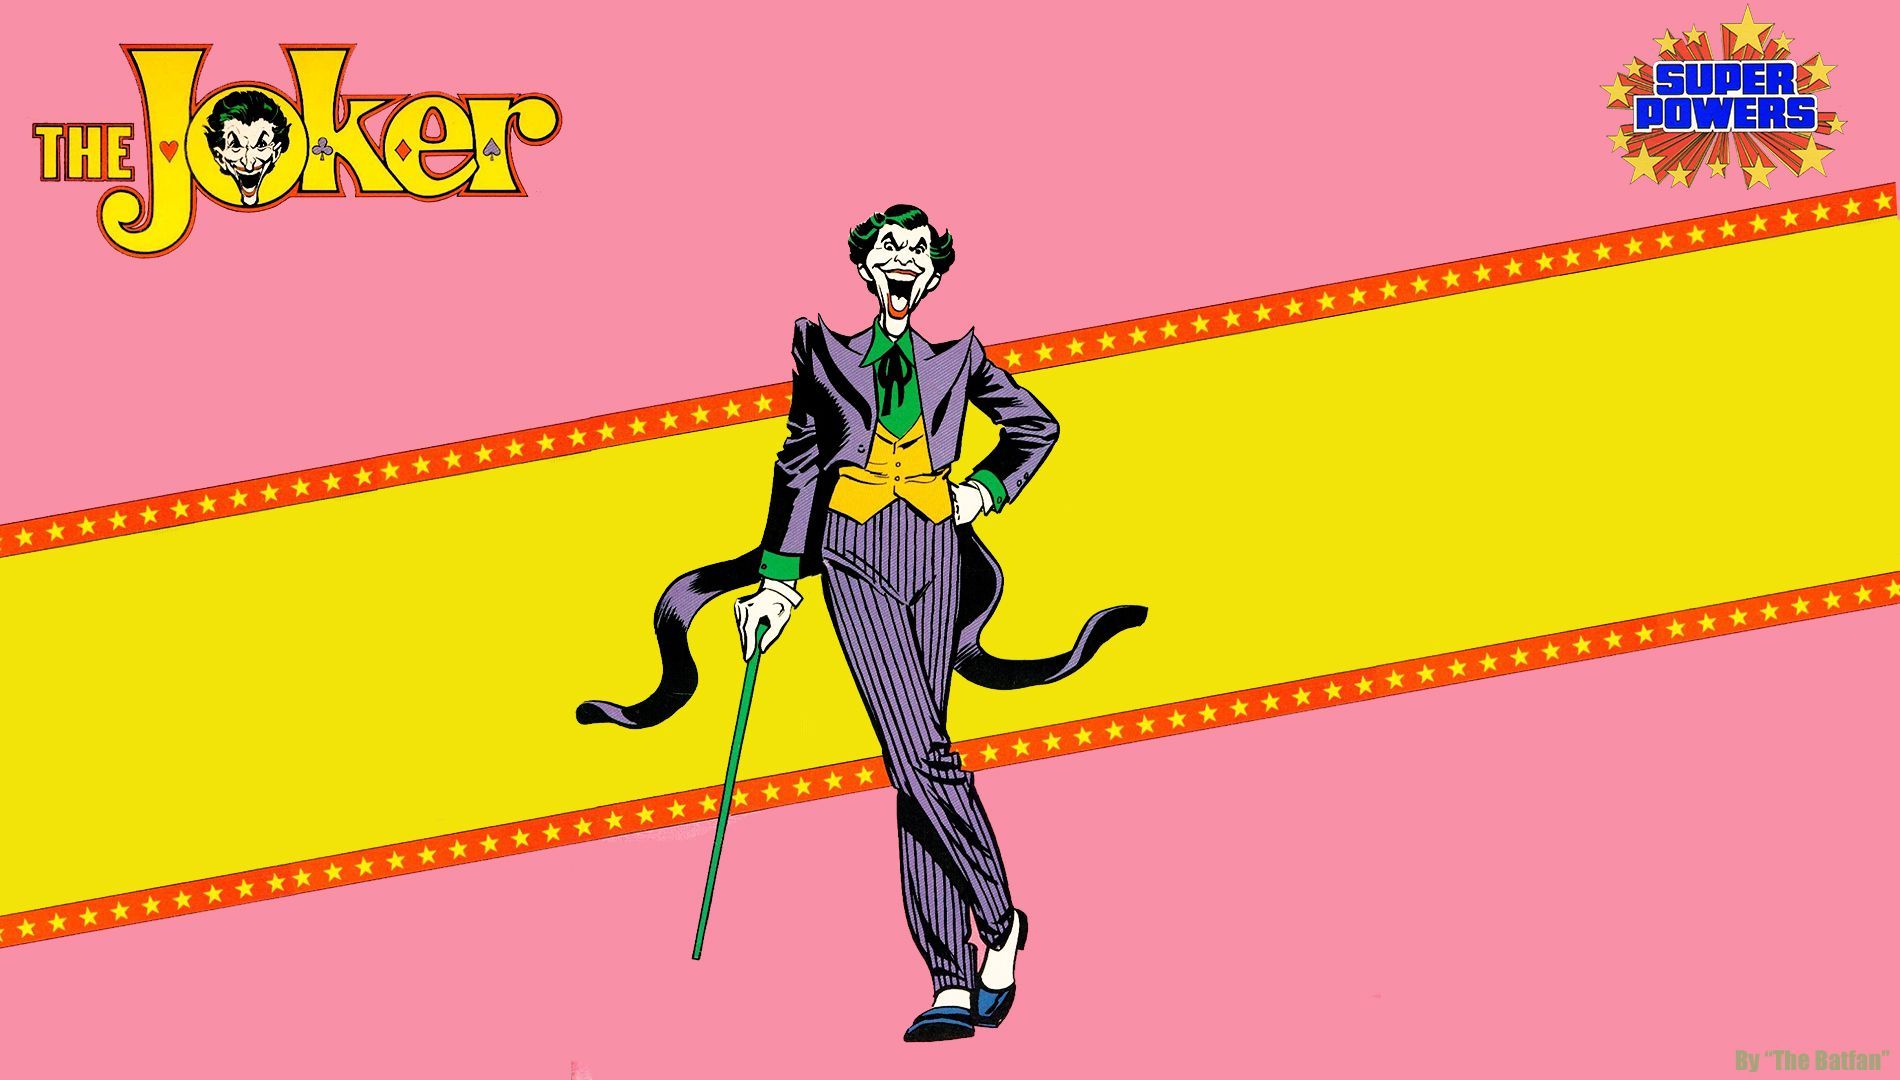 Joker wallpaper based on Super Powers coloring book. Batman wallpaper, Joker wallpaper, Coloring books